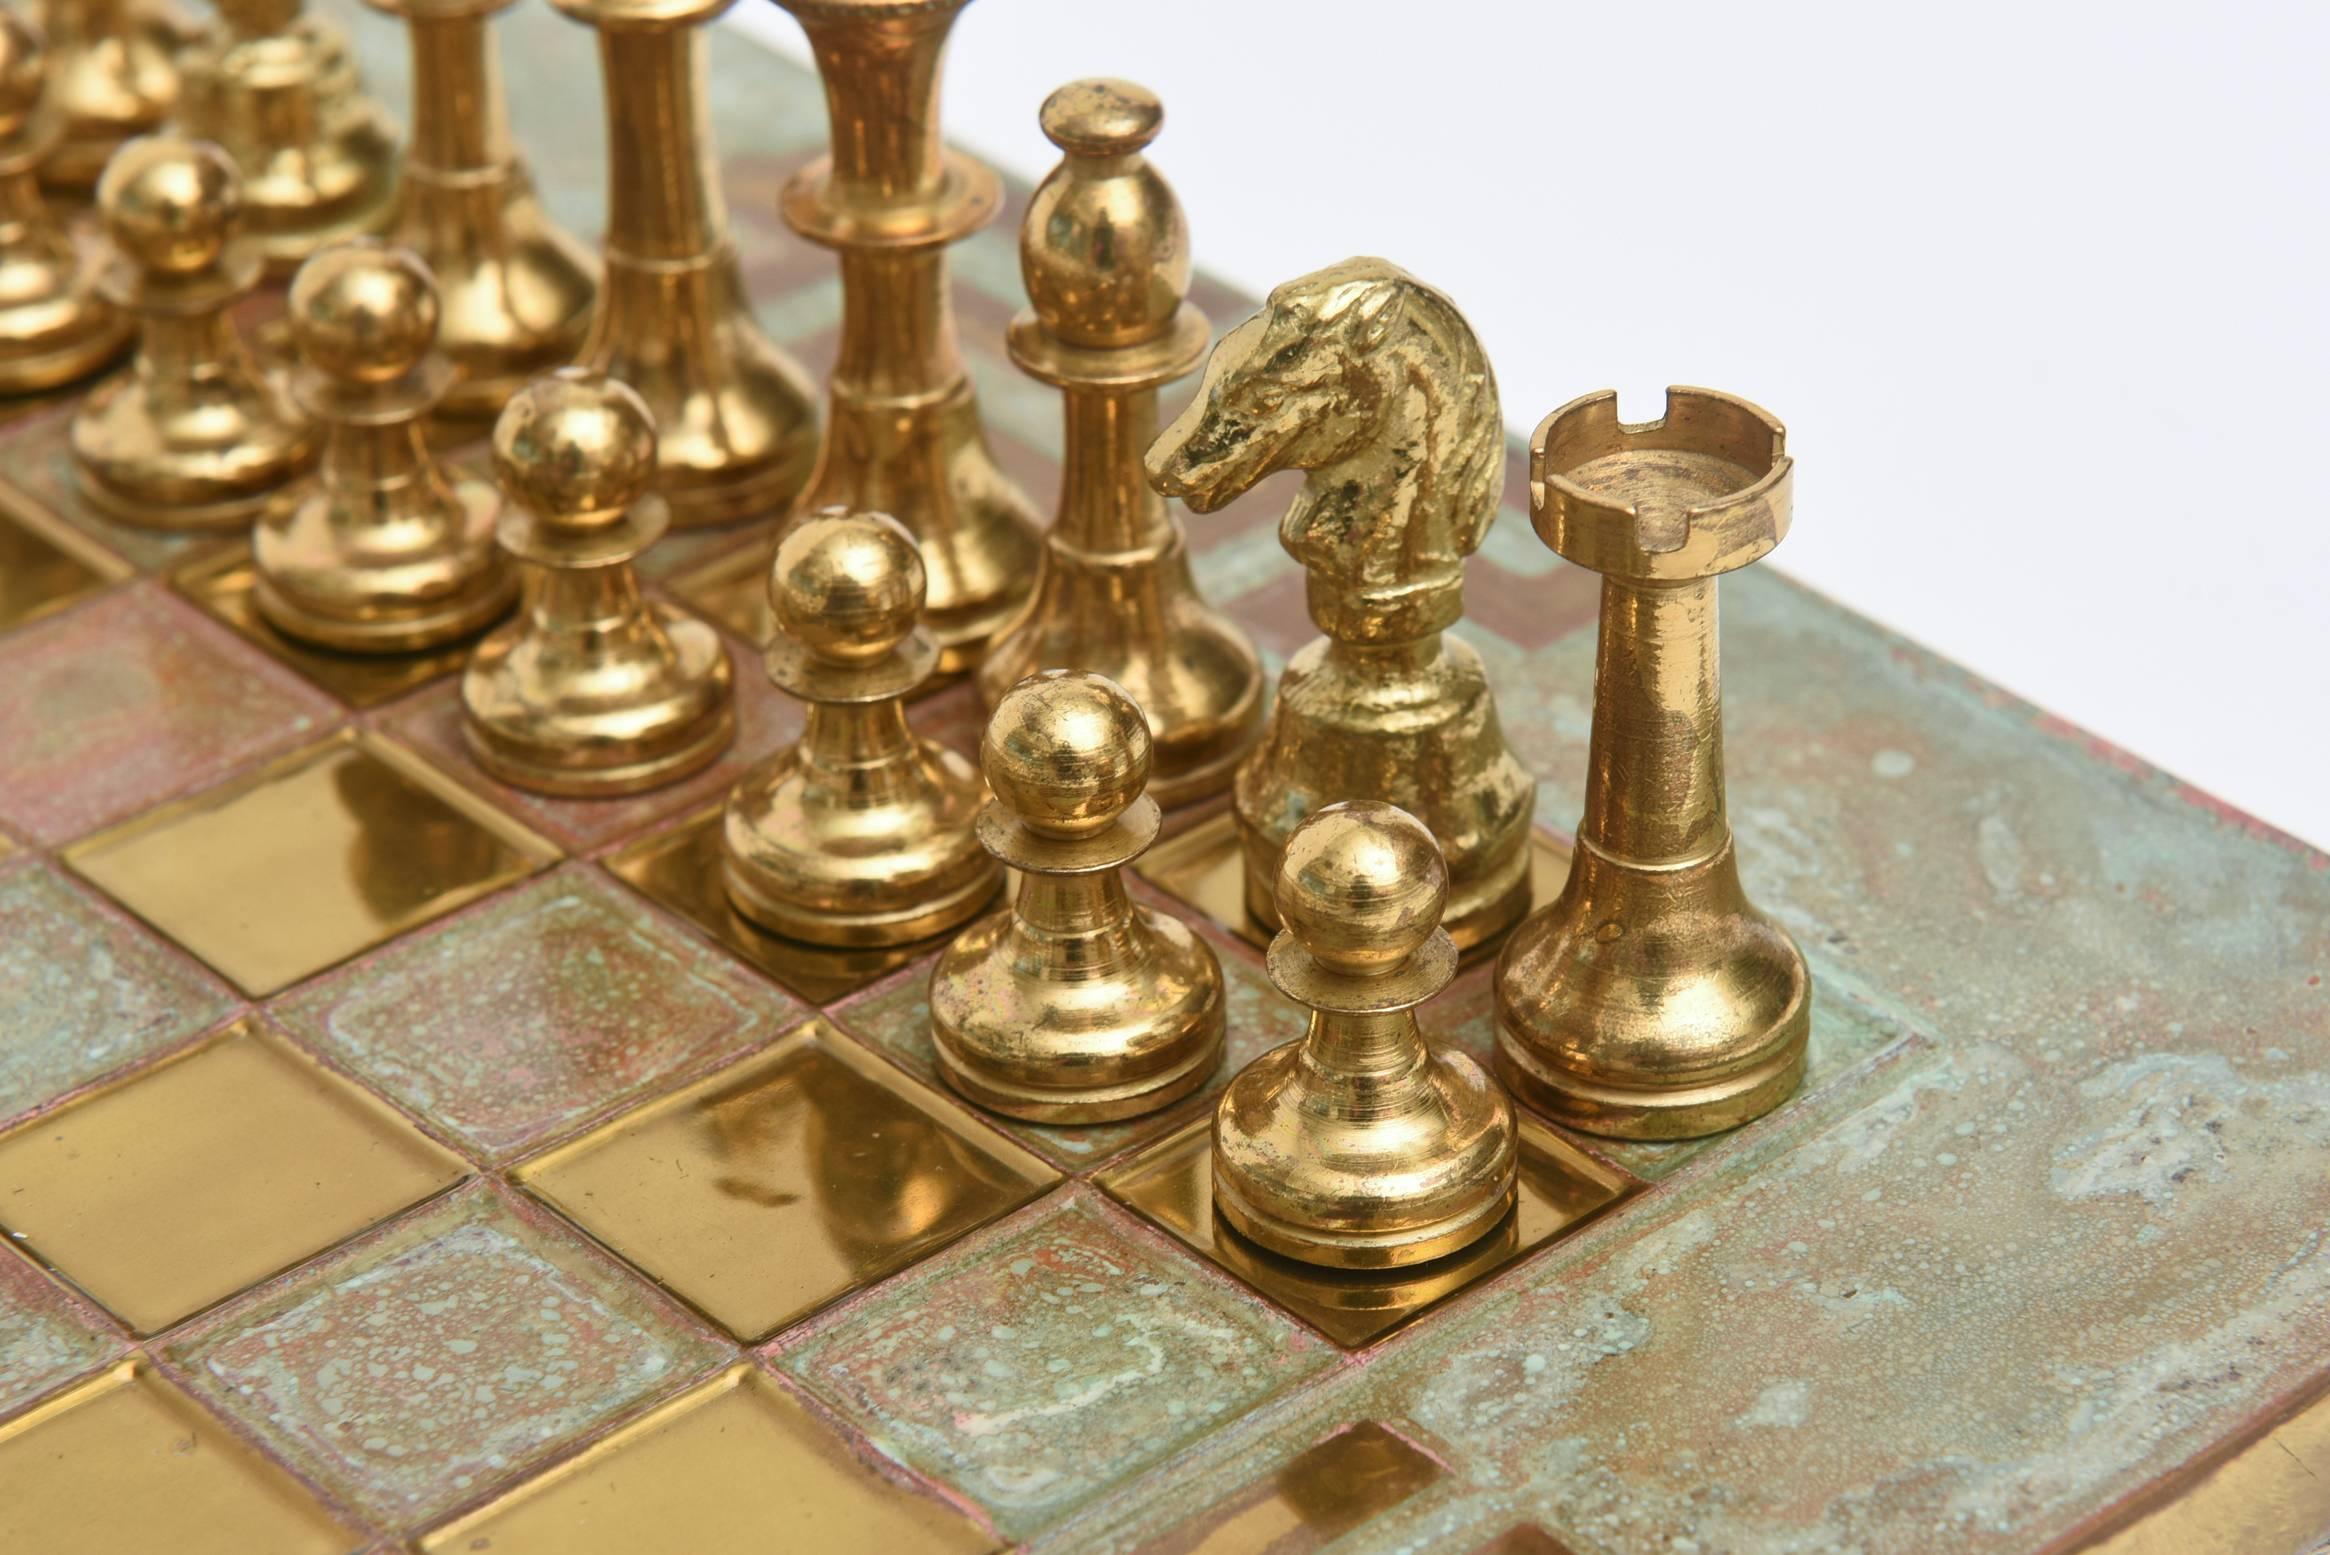  Greek Key Mid-Century Modern Chrome, Brass & Copper Chess Set /SALE 1